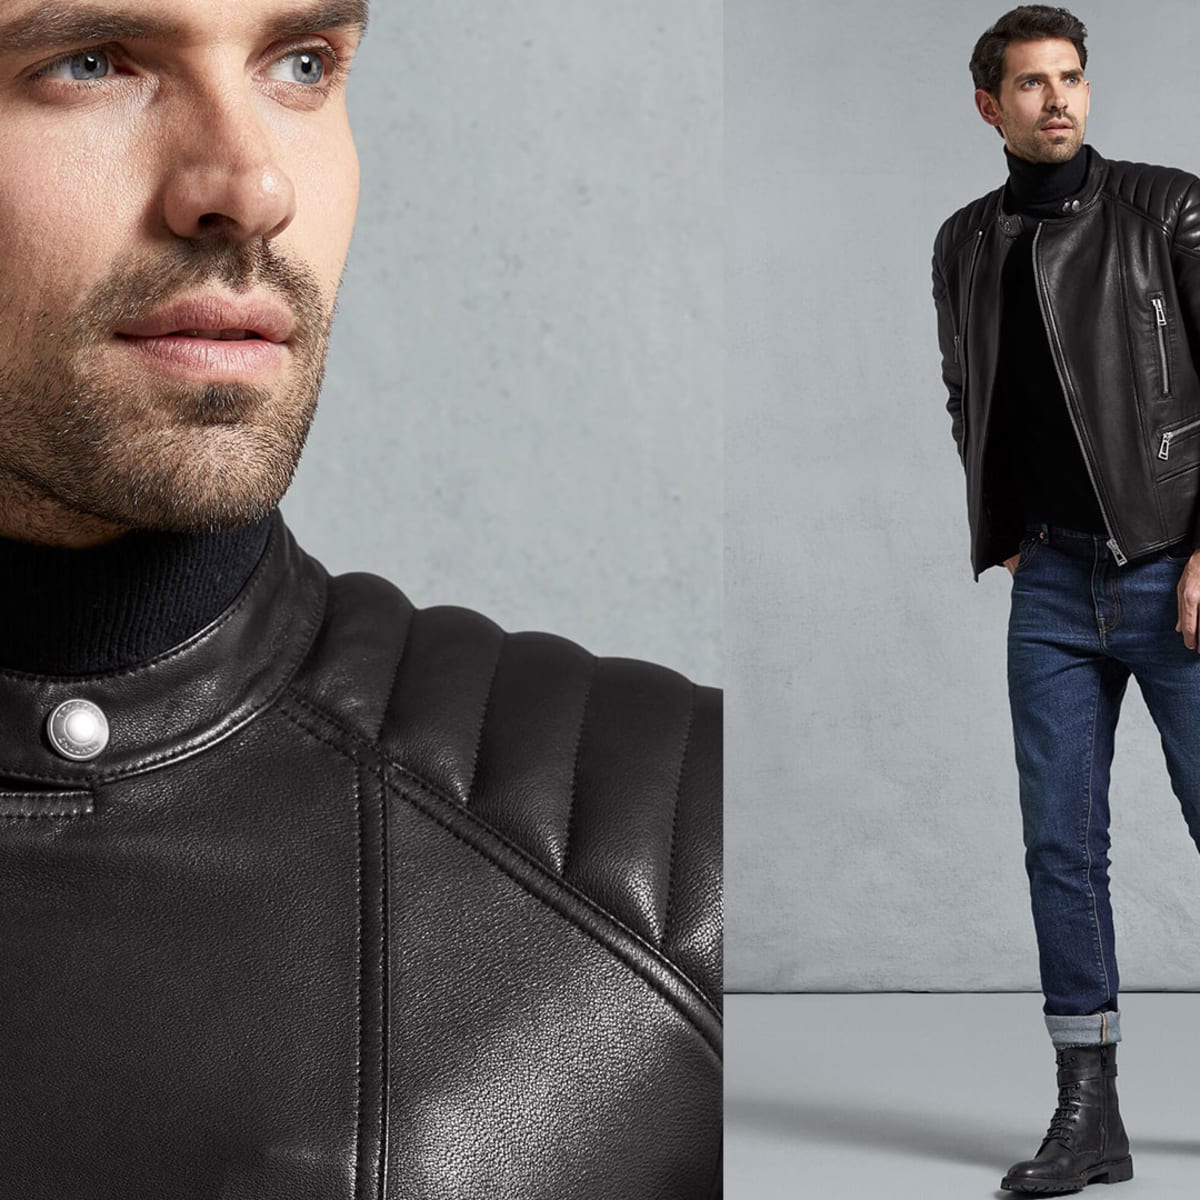 Buy Vegan Leather Jacket From Fashion Scrapbook